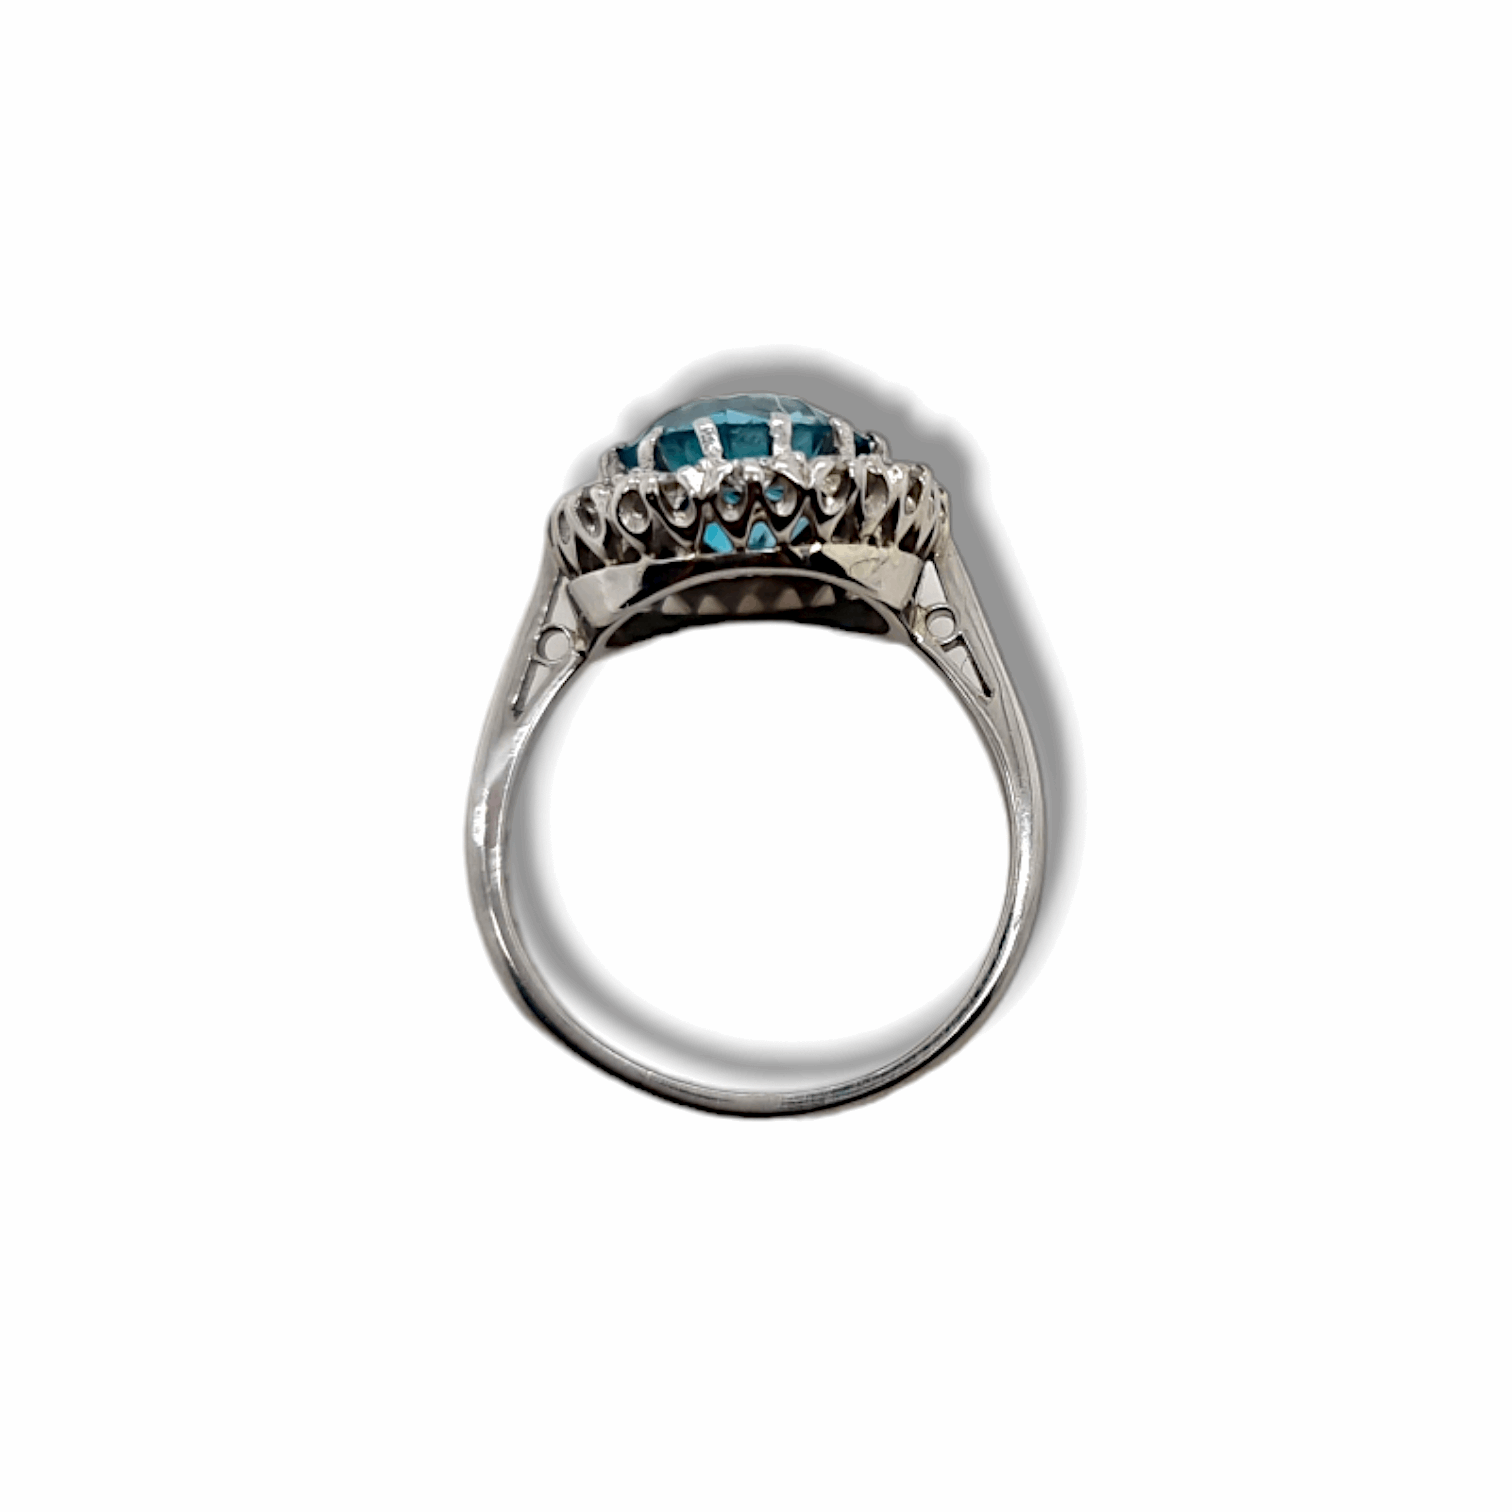 Blue Zircon & Diamond Cluster Ring